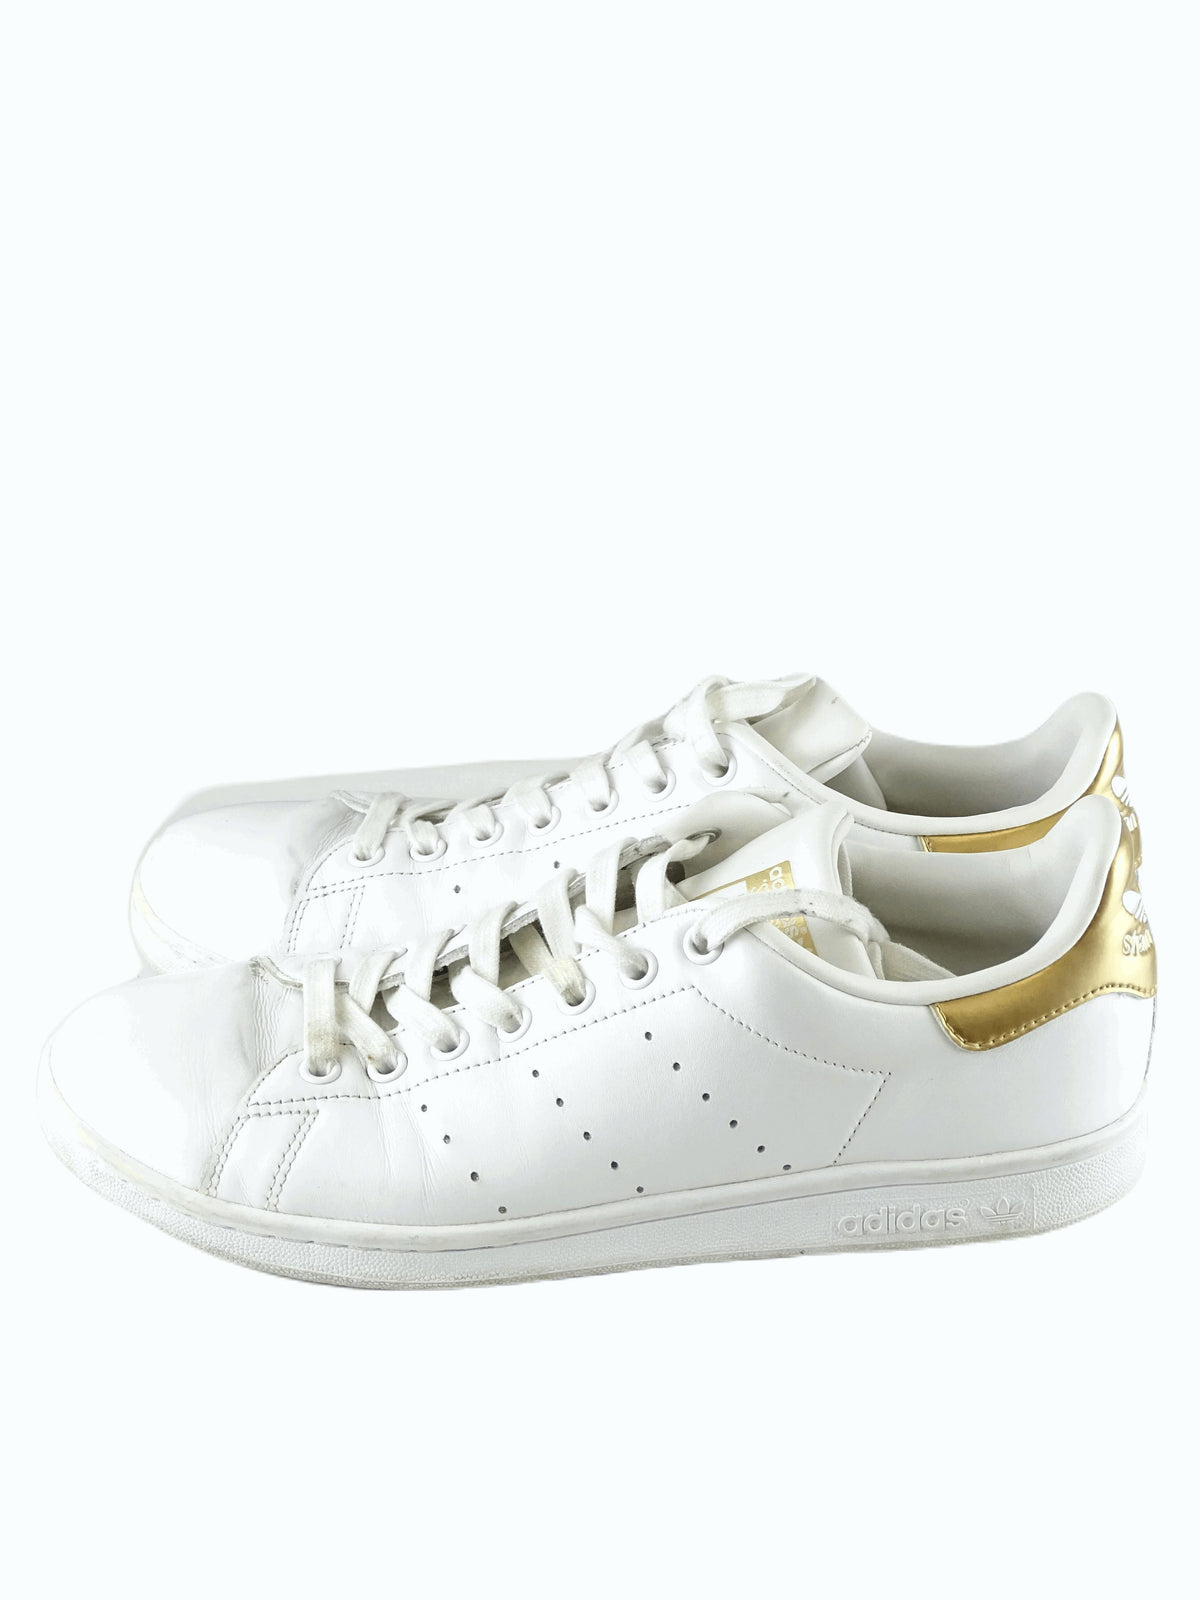 Adidas Stan Smith White and Gold Sneakers AU/US 10 (EU 41)